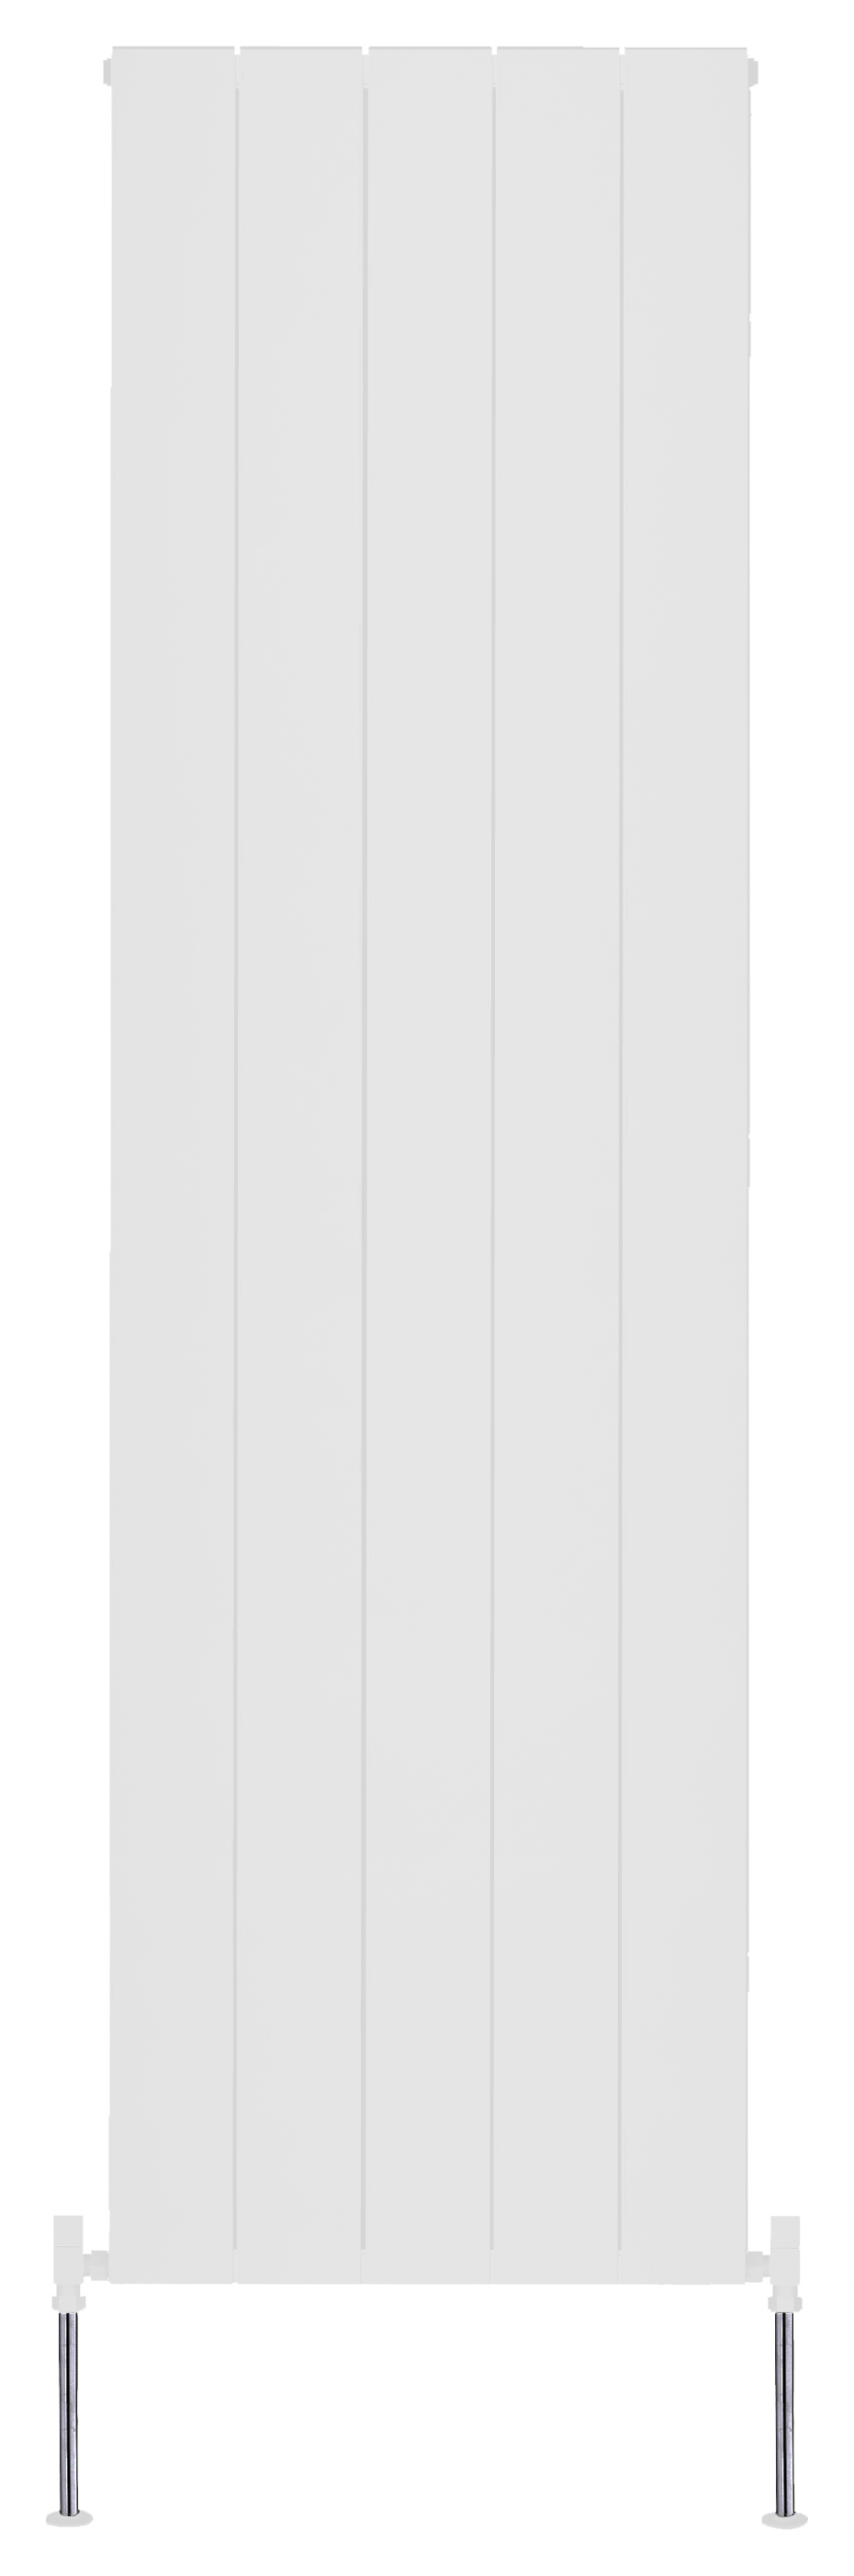 Image of Towelrads White Ascot Double Vertical Designer Radiator - 1800 x 305mm